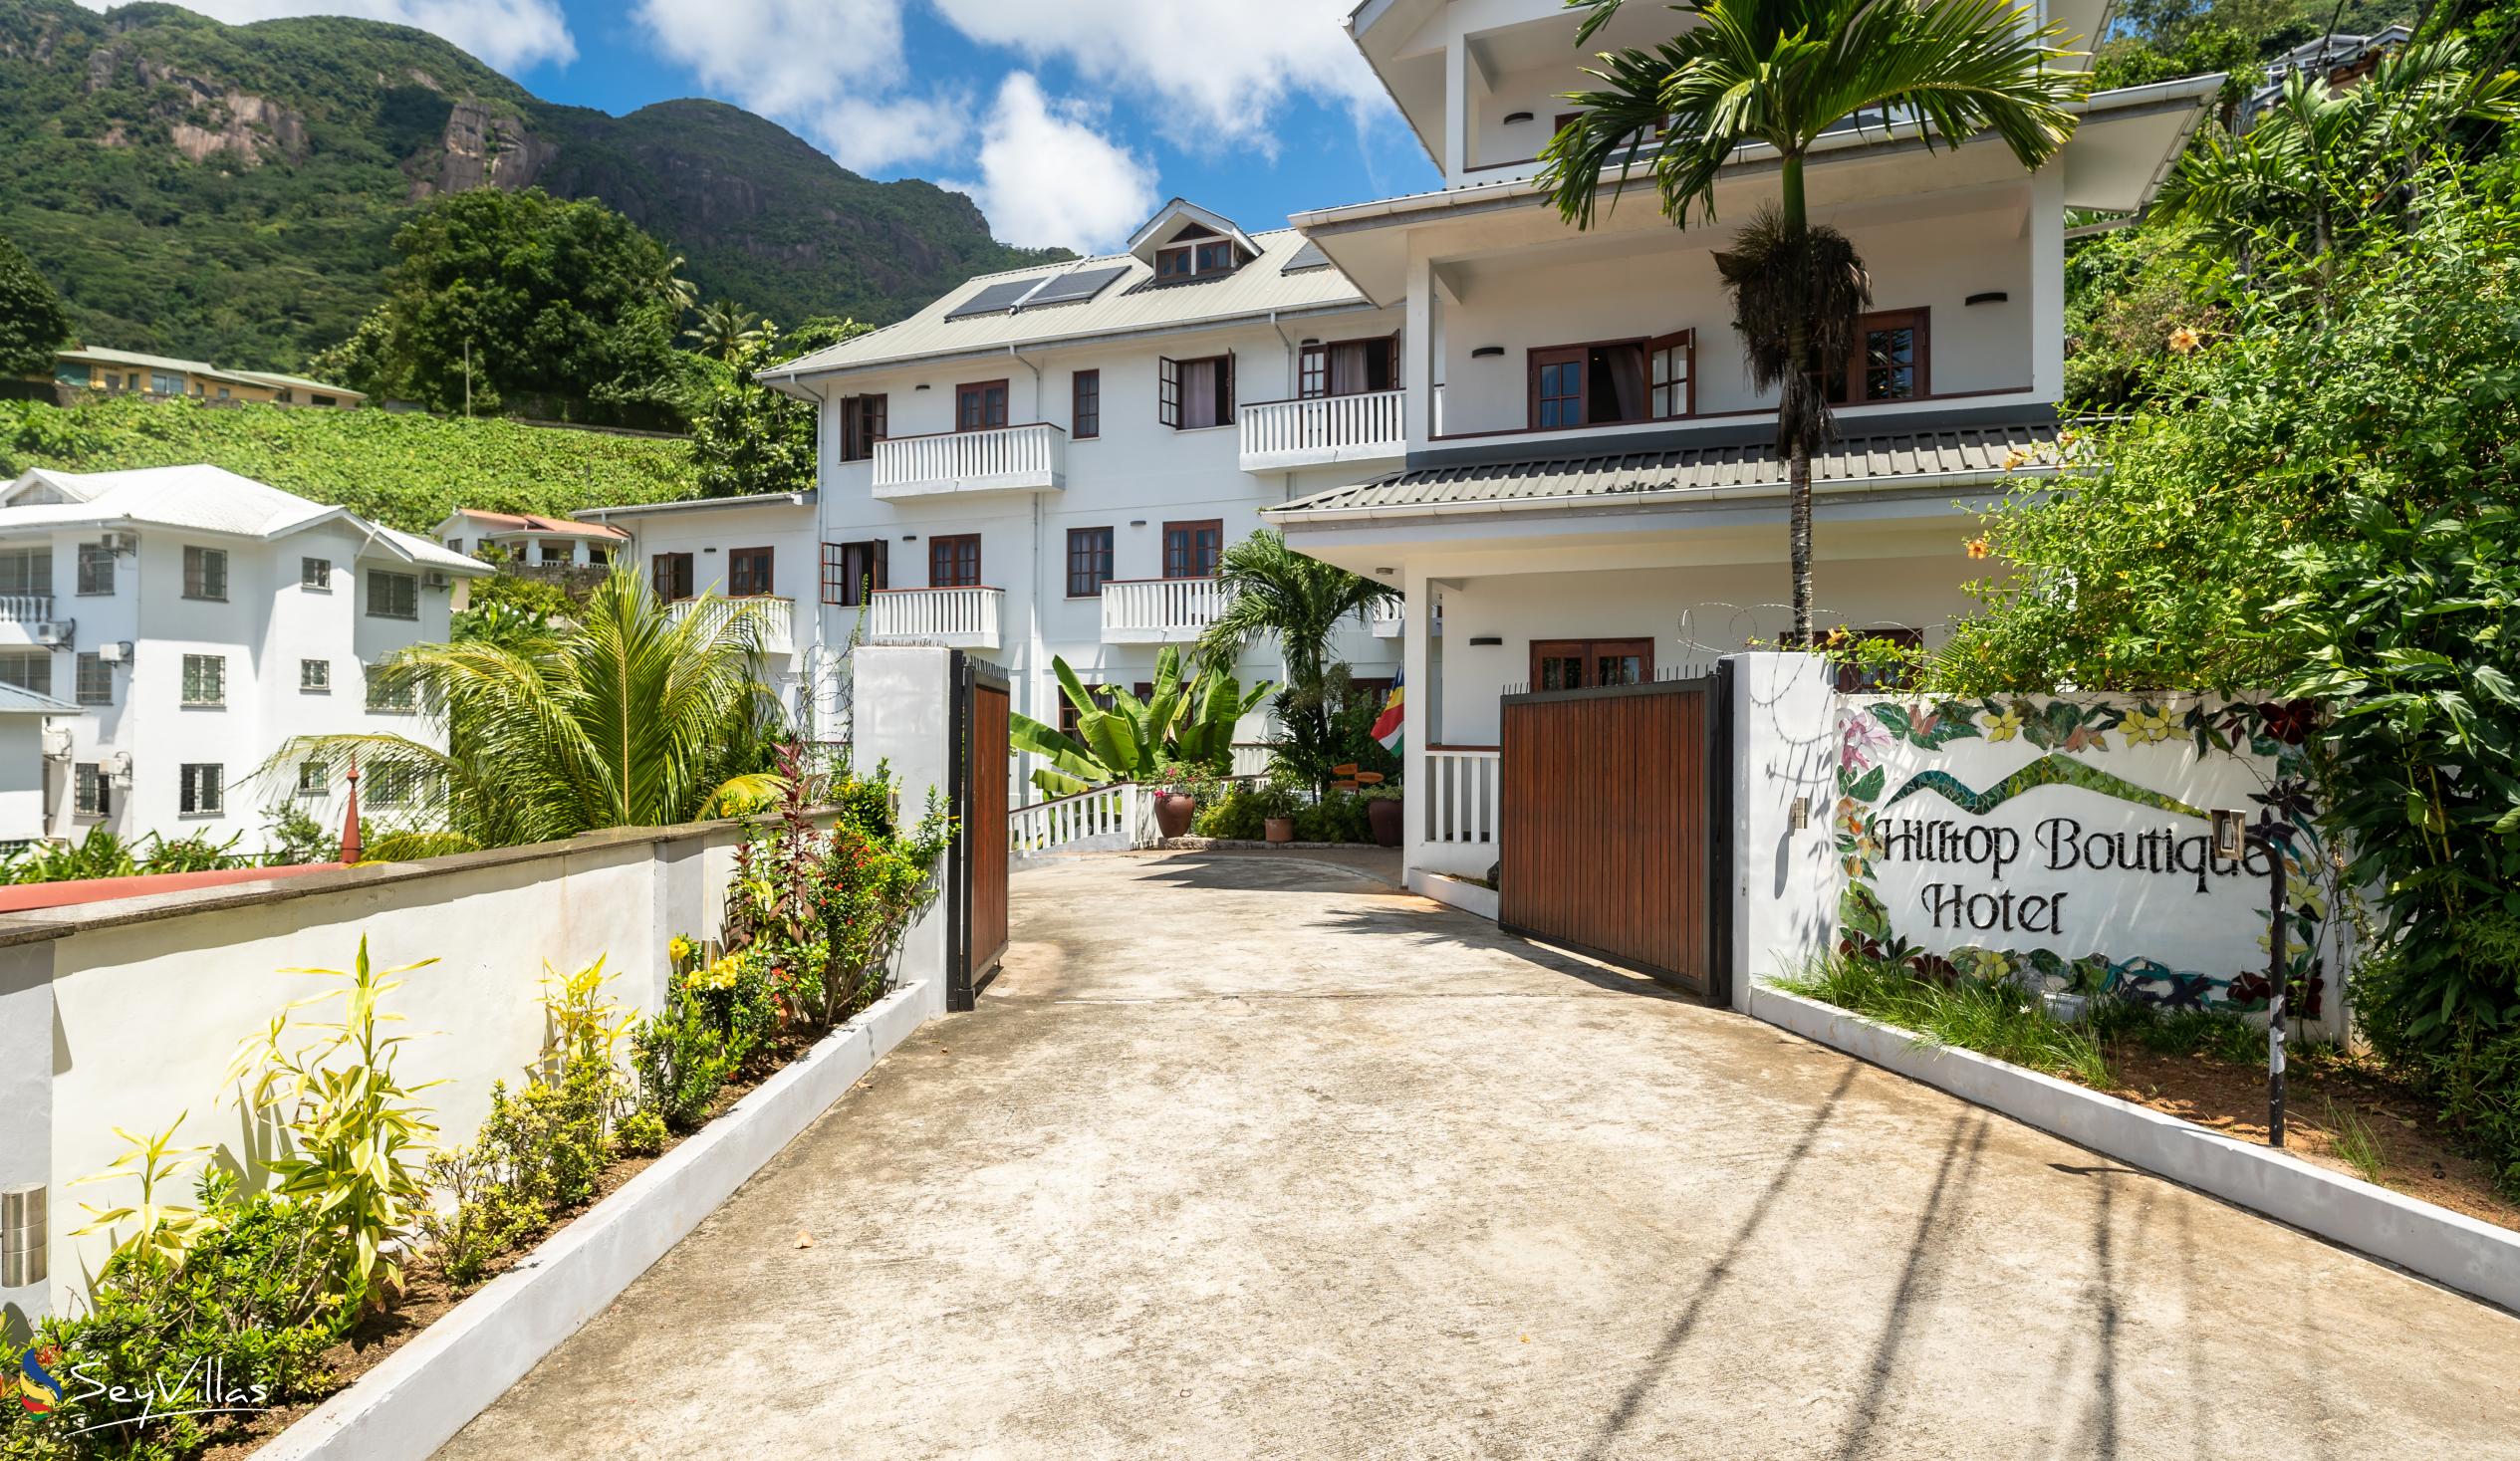 Foto 6: Hilltop Boutique Hotel - Esterno - Mahé (Seychelles)